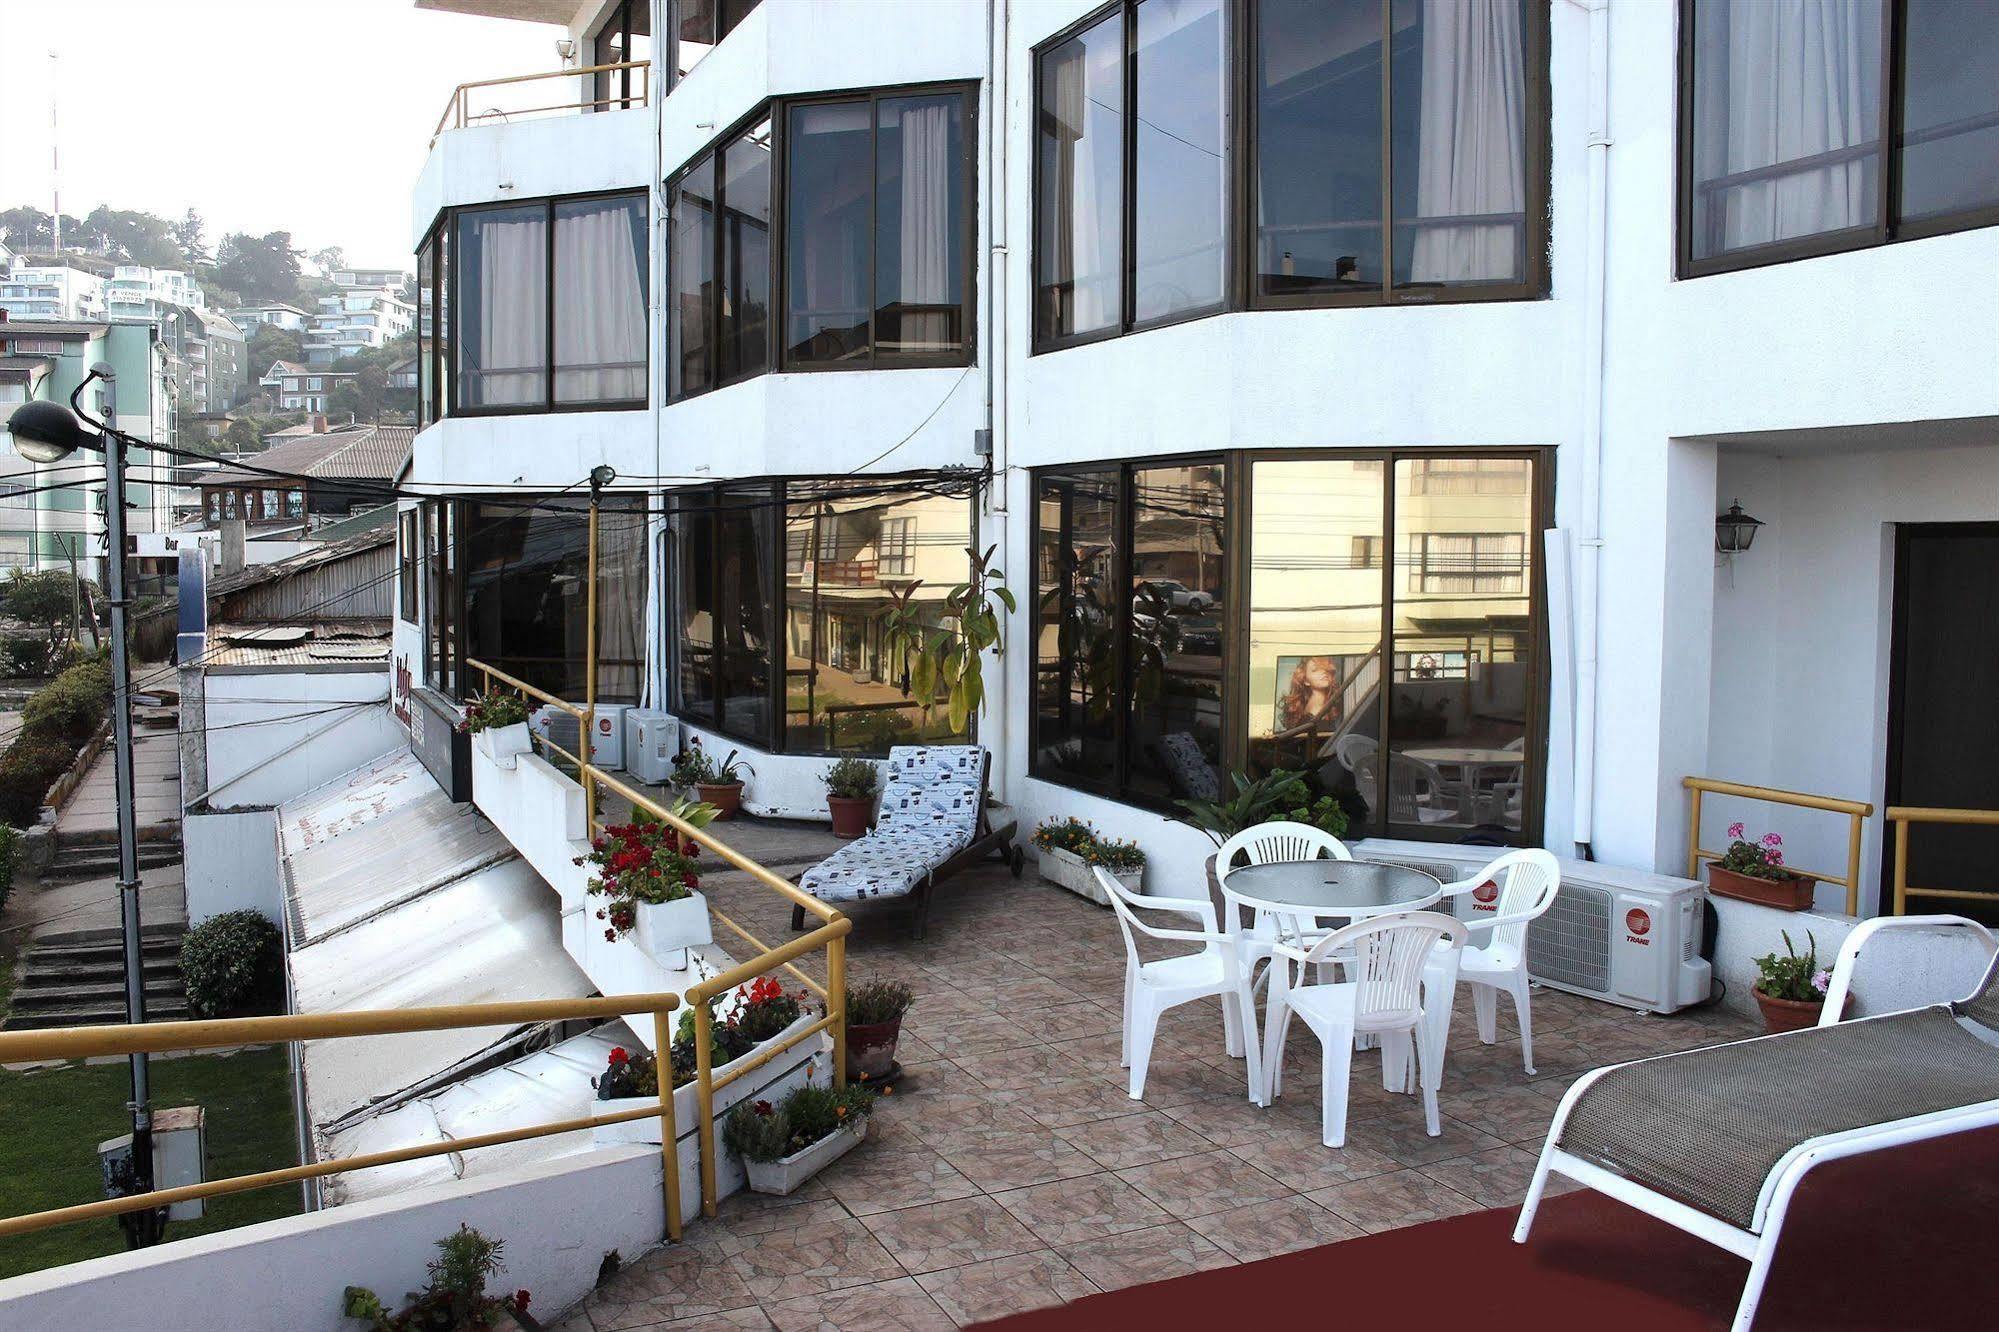 Pieros Hotel Vina del Mar Exterior photo